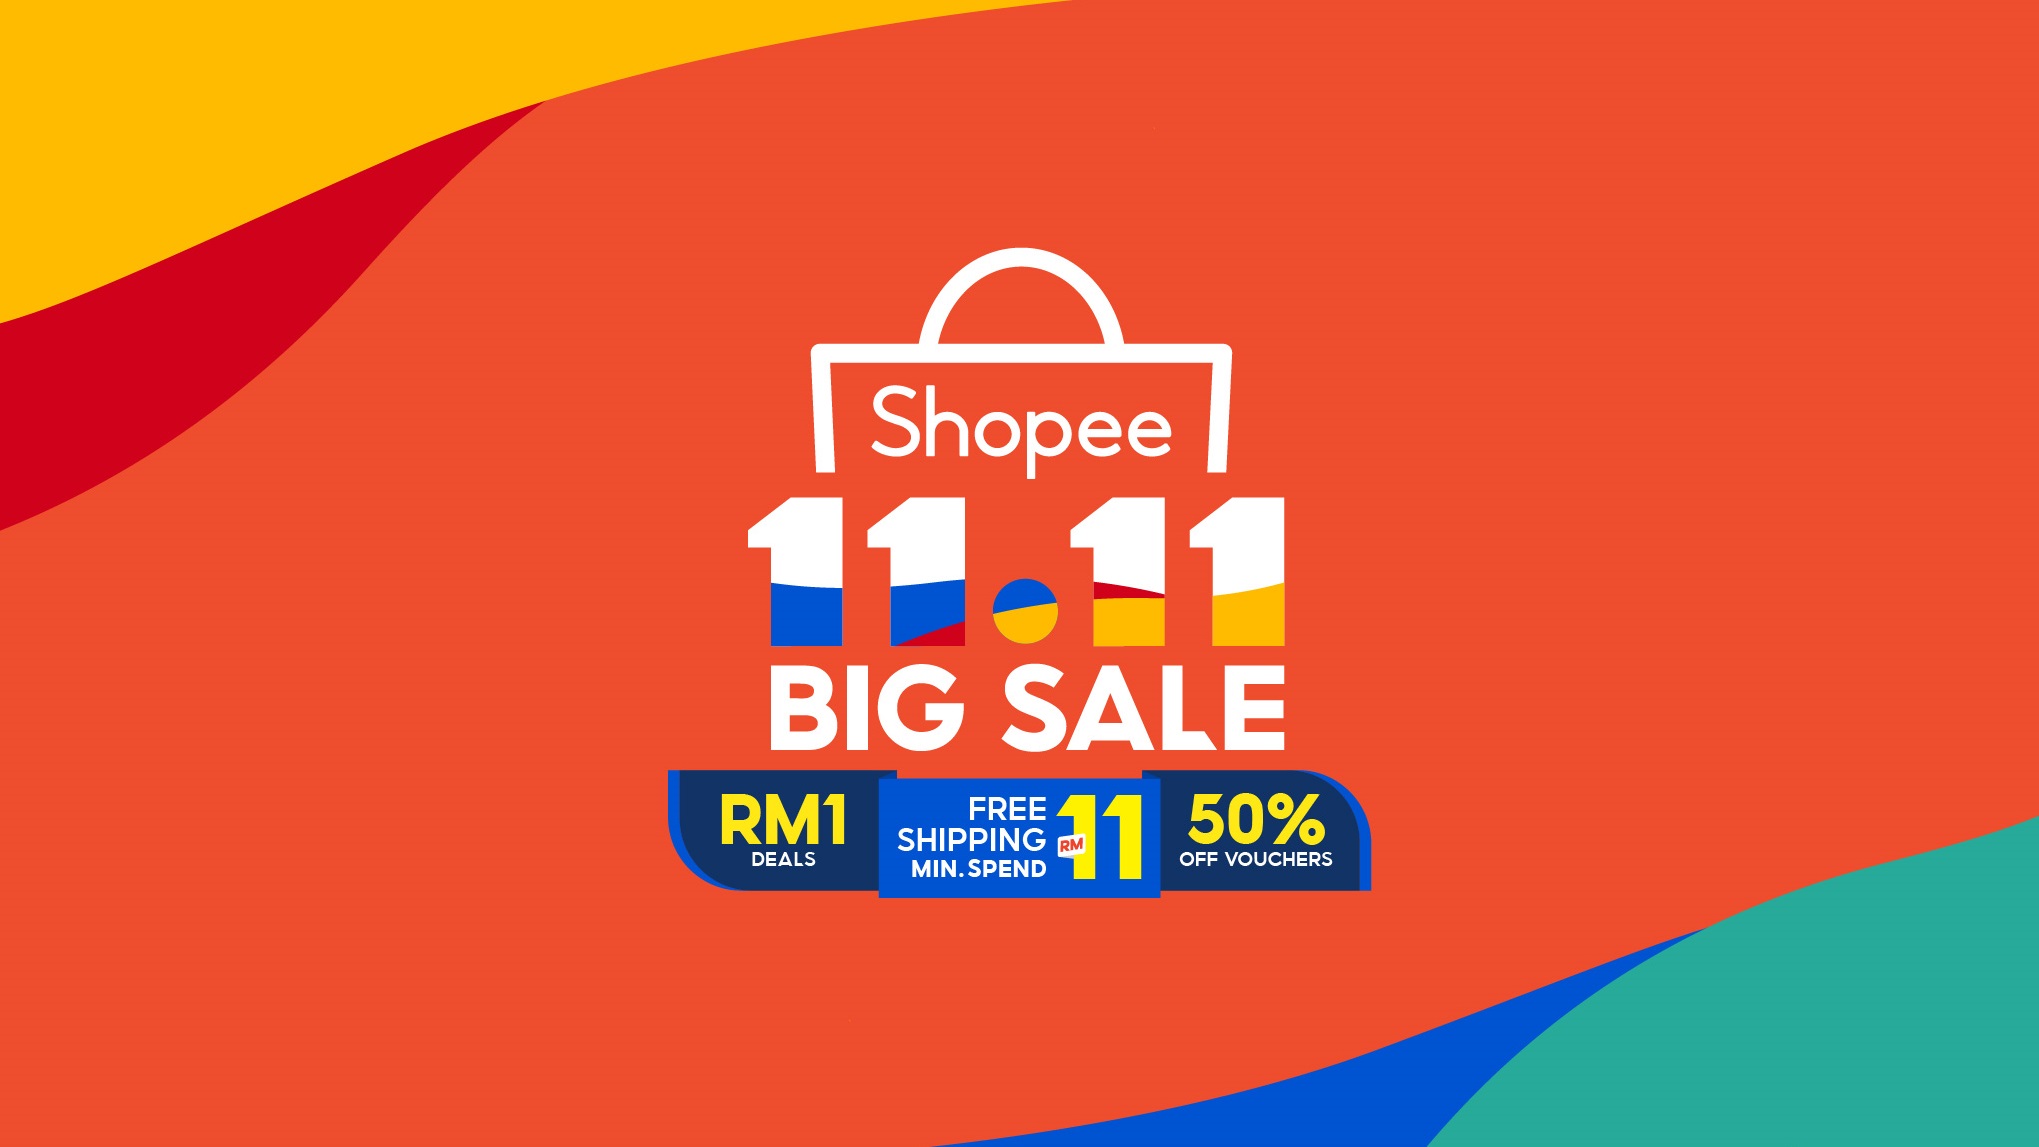 Shopee 11.11 Big Sale